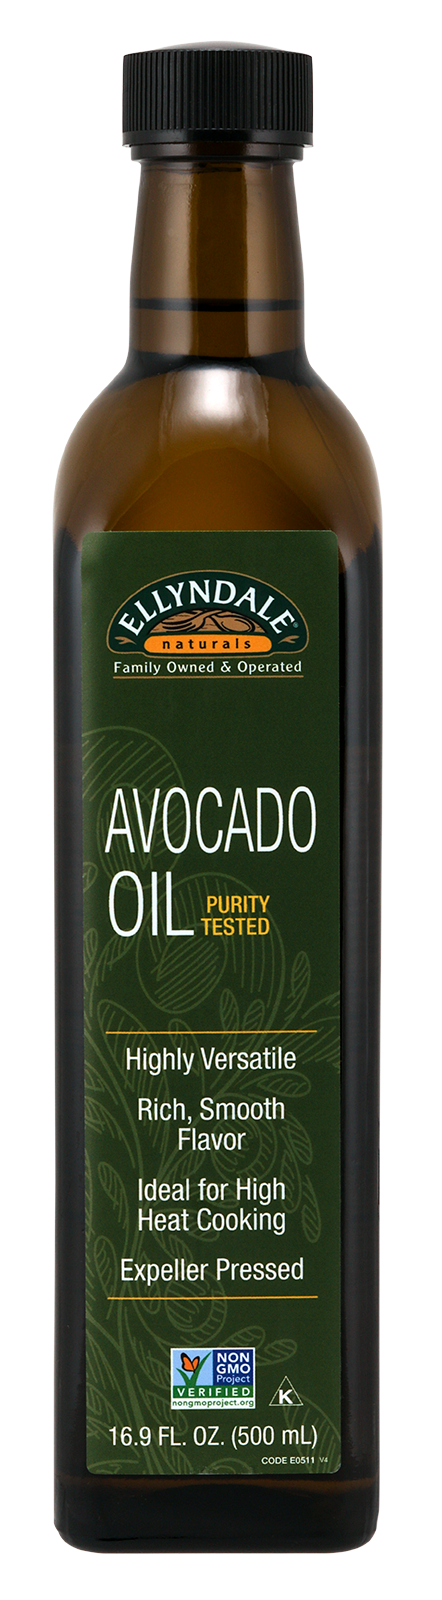 Avocado Cooking Oil in Glass Bottle - 16.9 fl. oz.